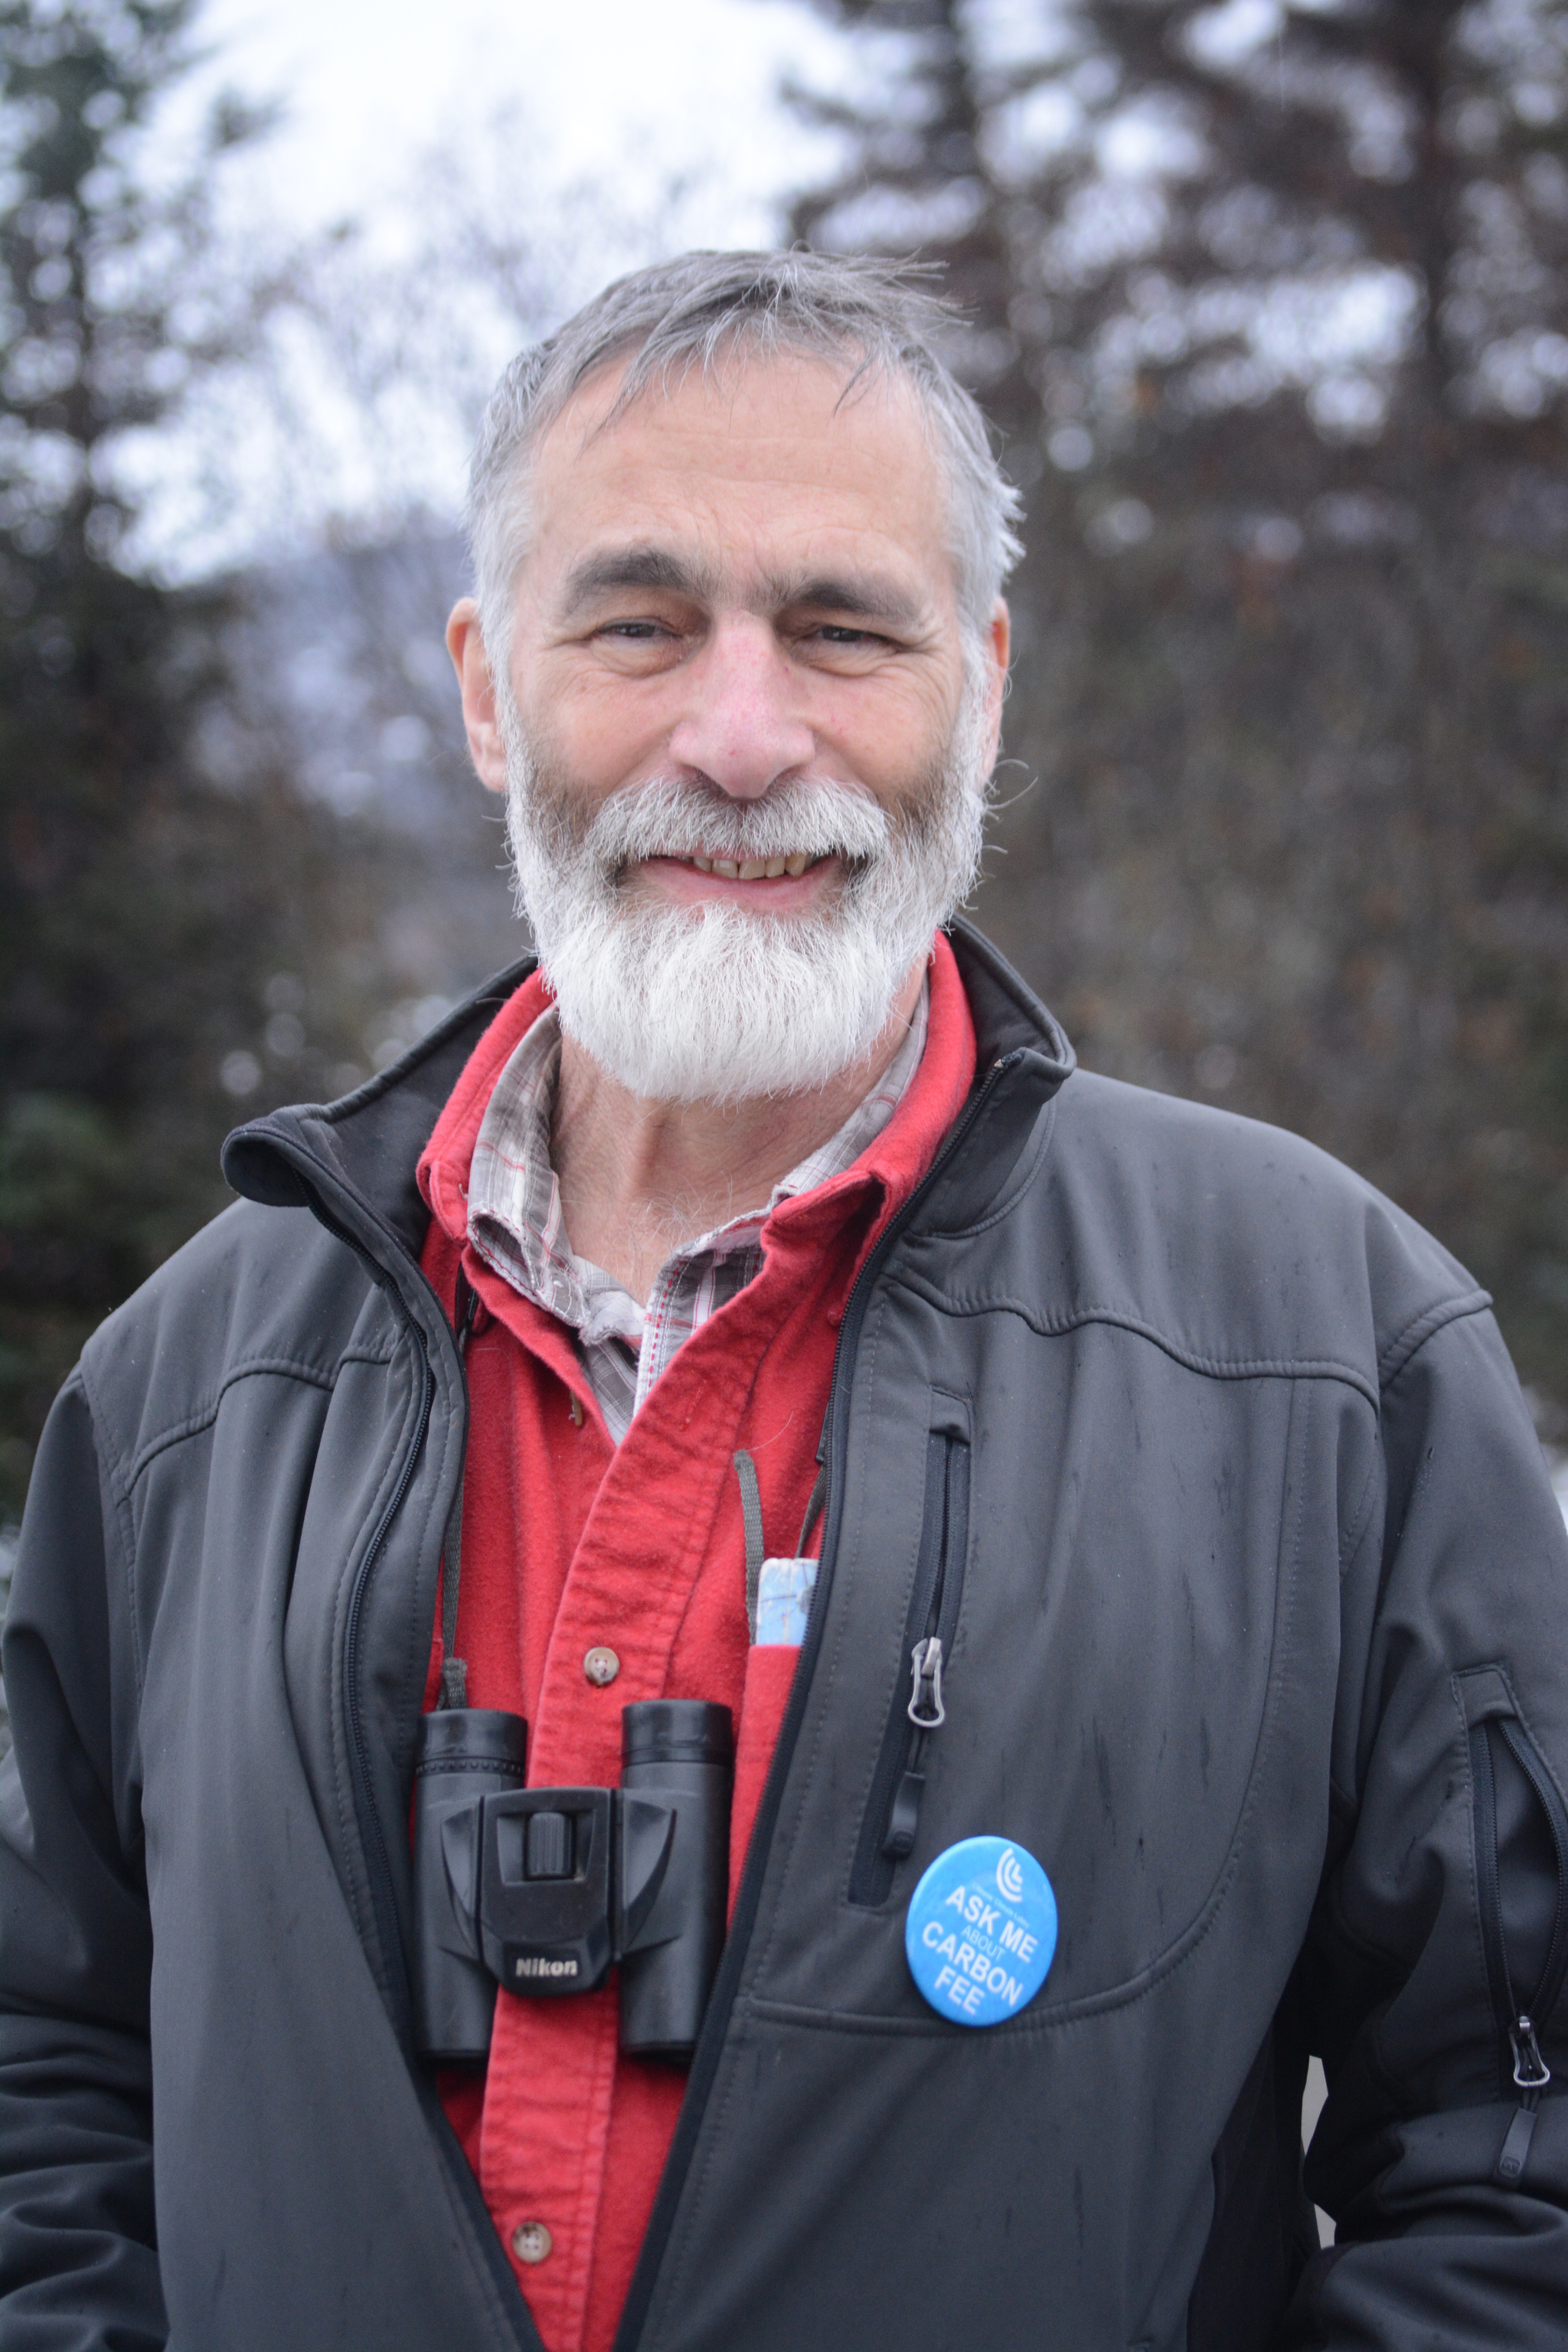 Citzens’ Climate Lobby Alaska state coordinator George Donart of Anchorage.